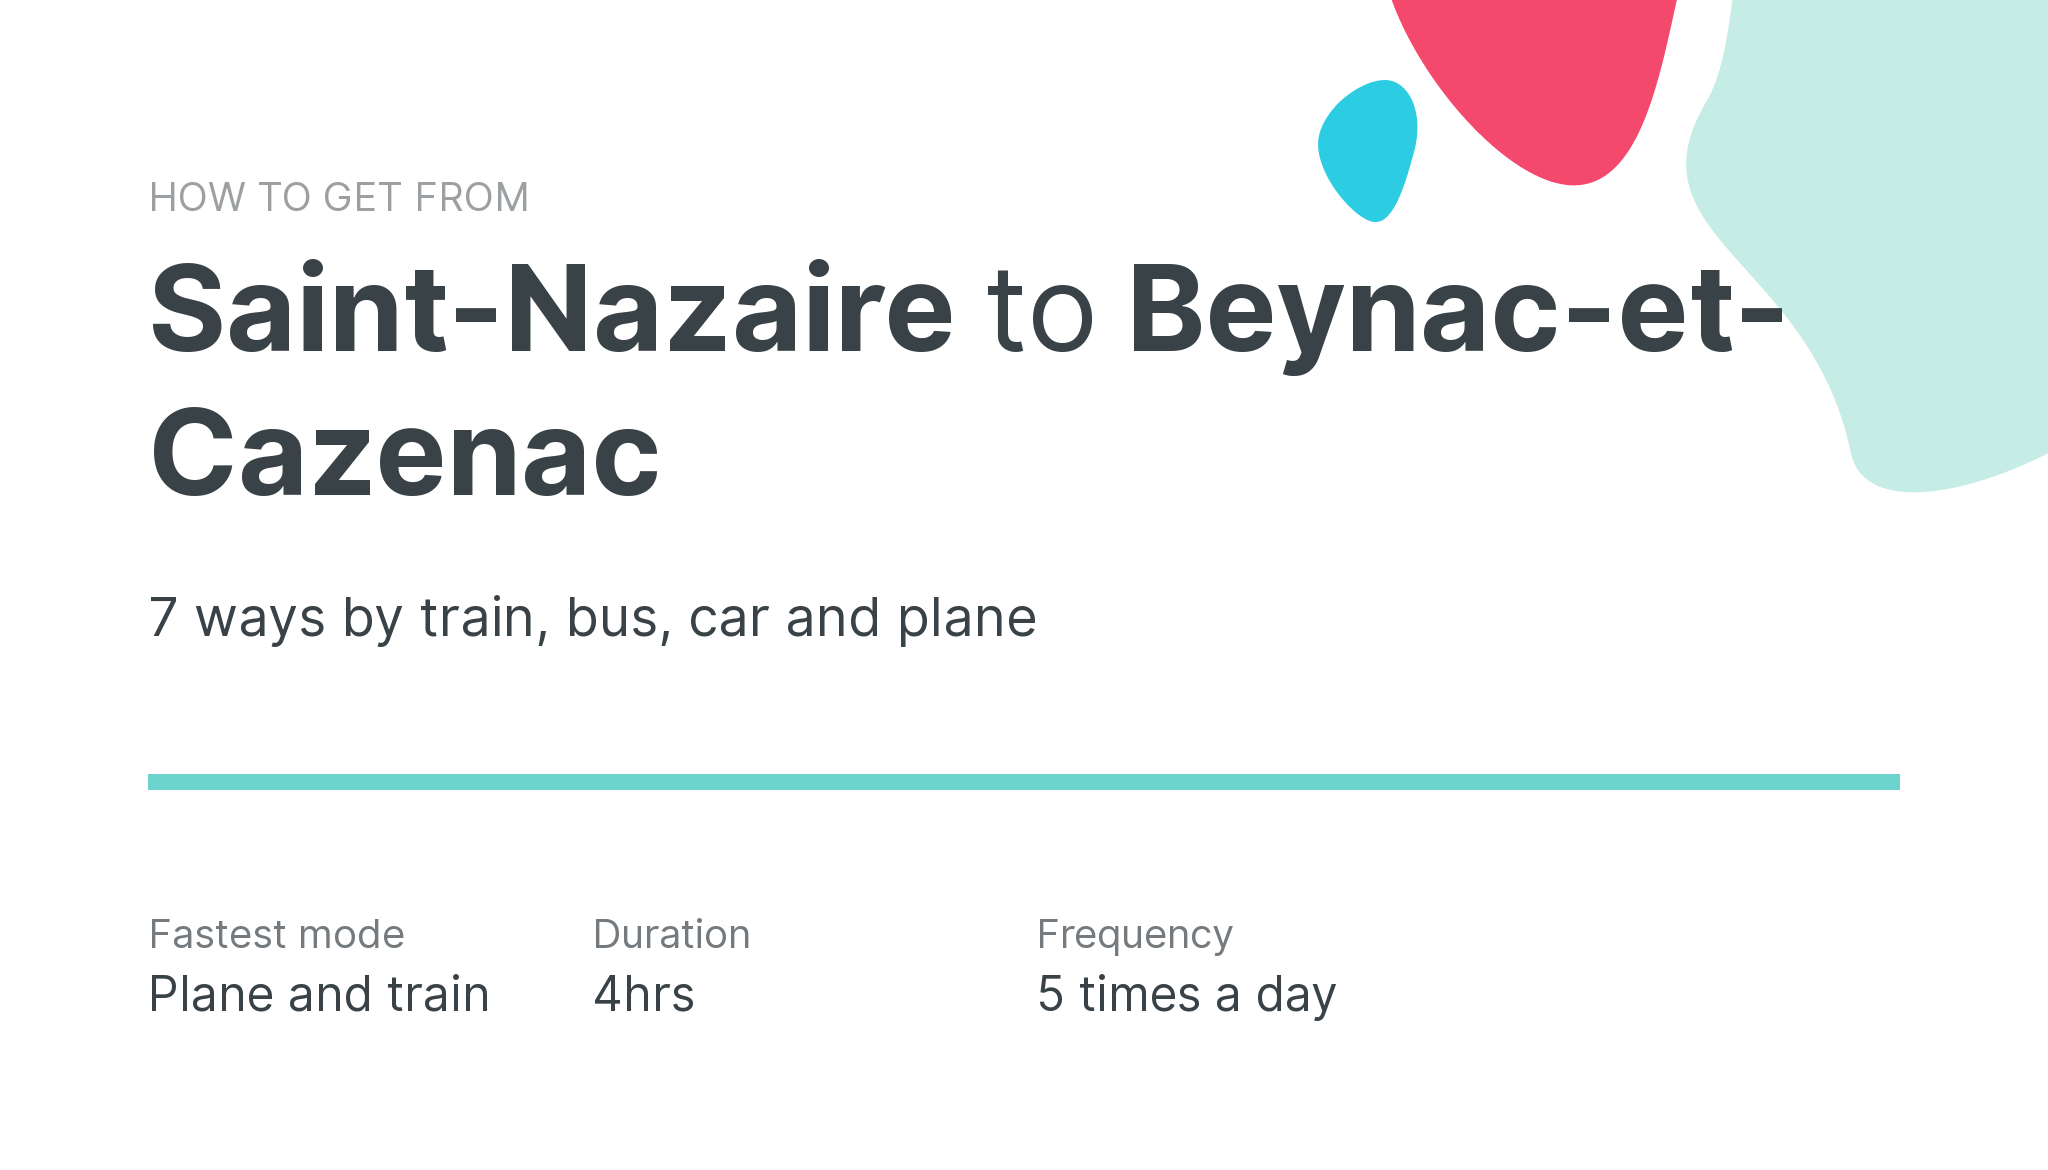 How do I get from Saint-Nazaire to Beynac-et-Cazenac